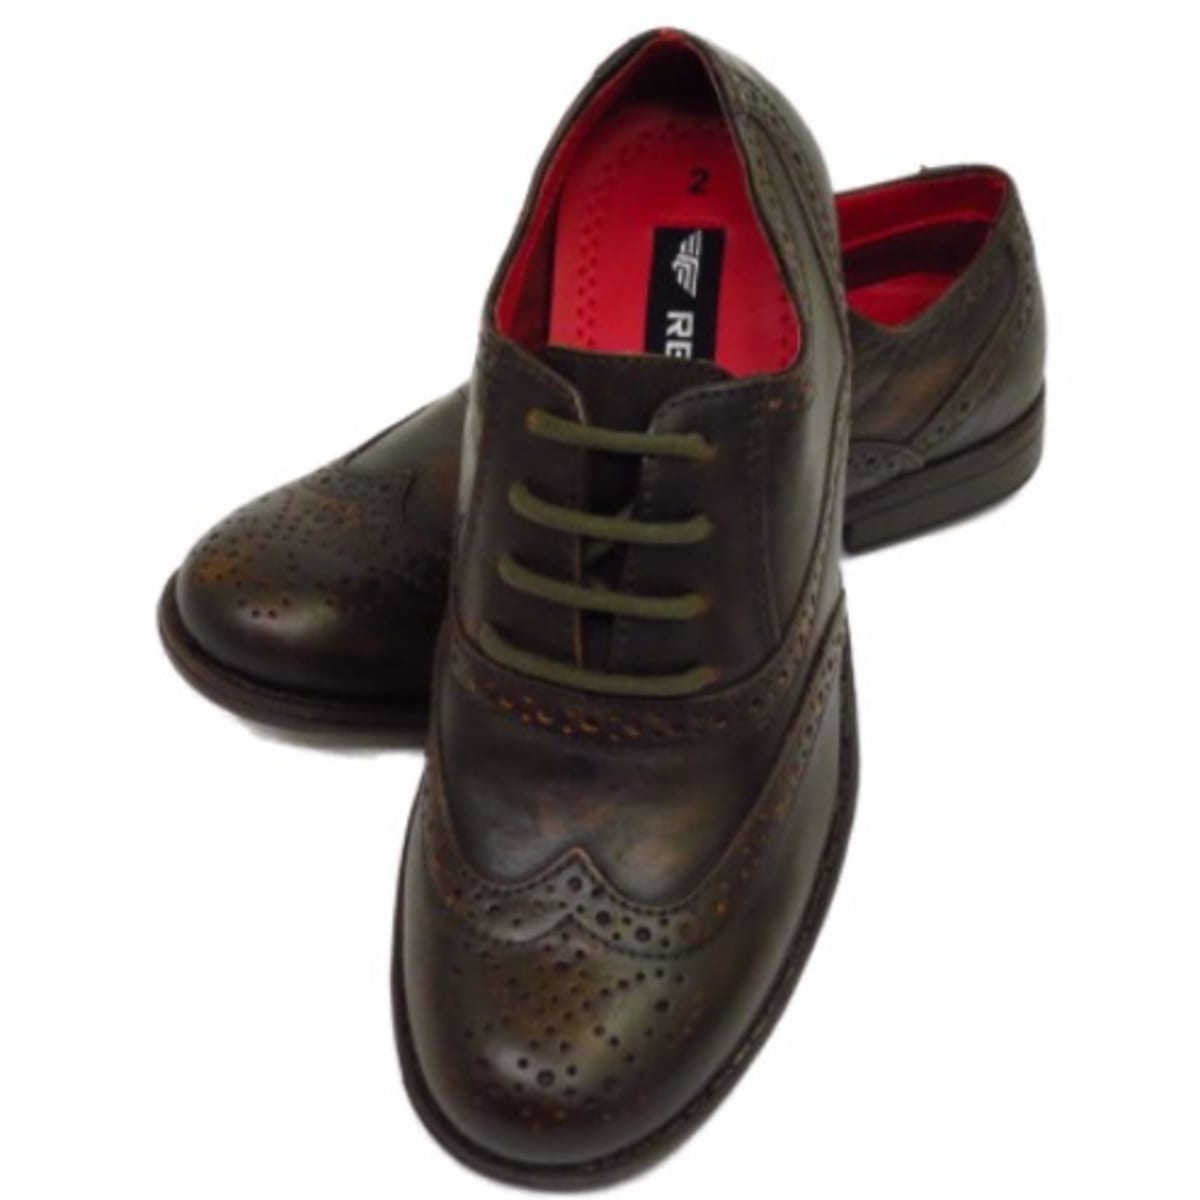 Men's Casual Fashion Business Suede Leather Shoes | Suede leather shoes,  Mens fashion casual, Dress shoes men